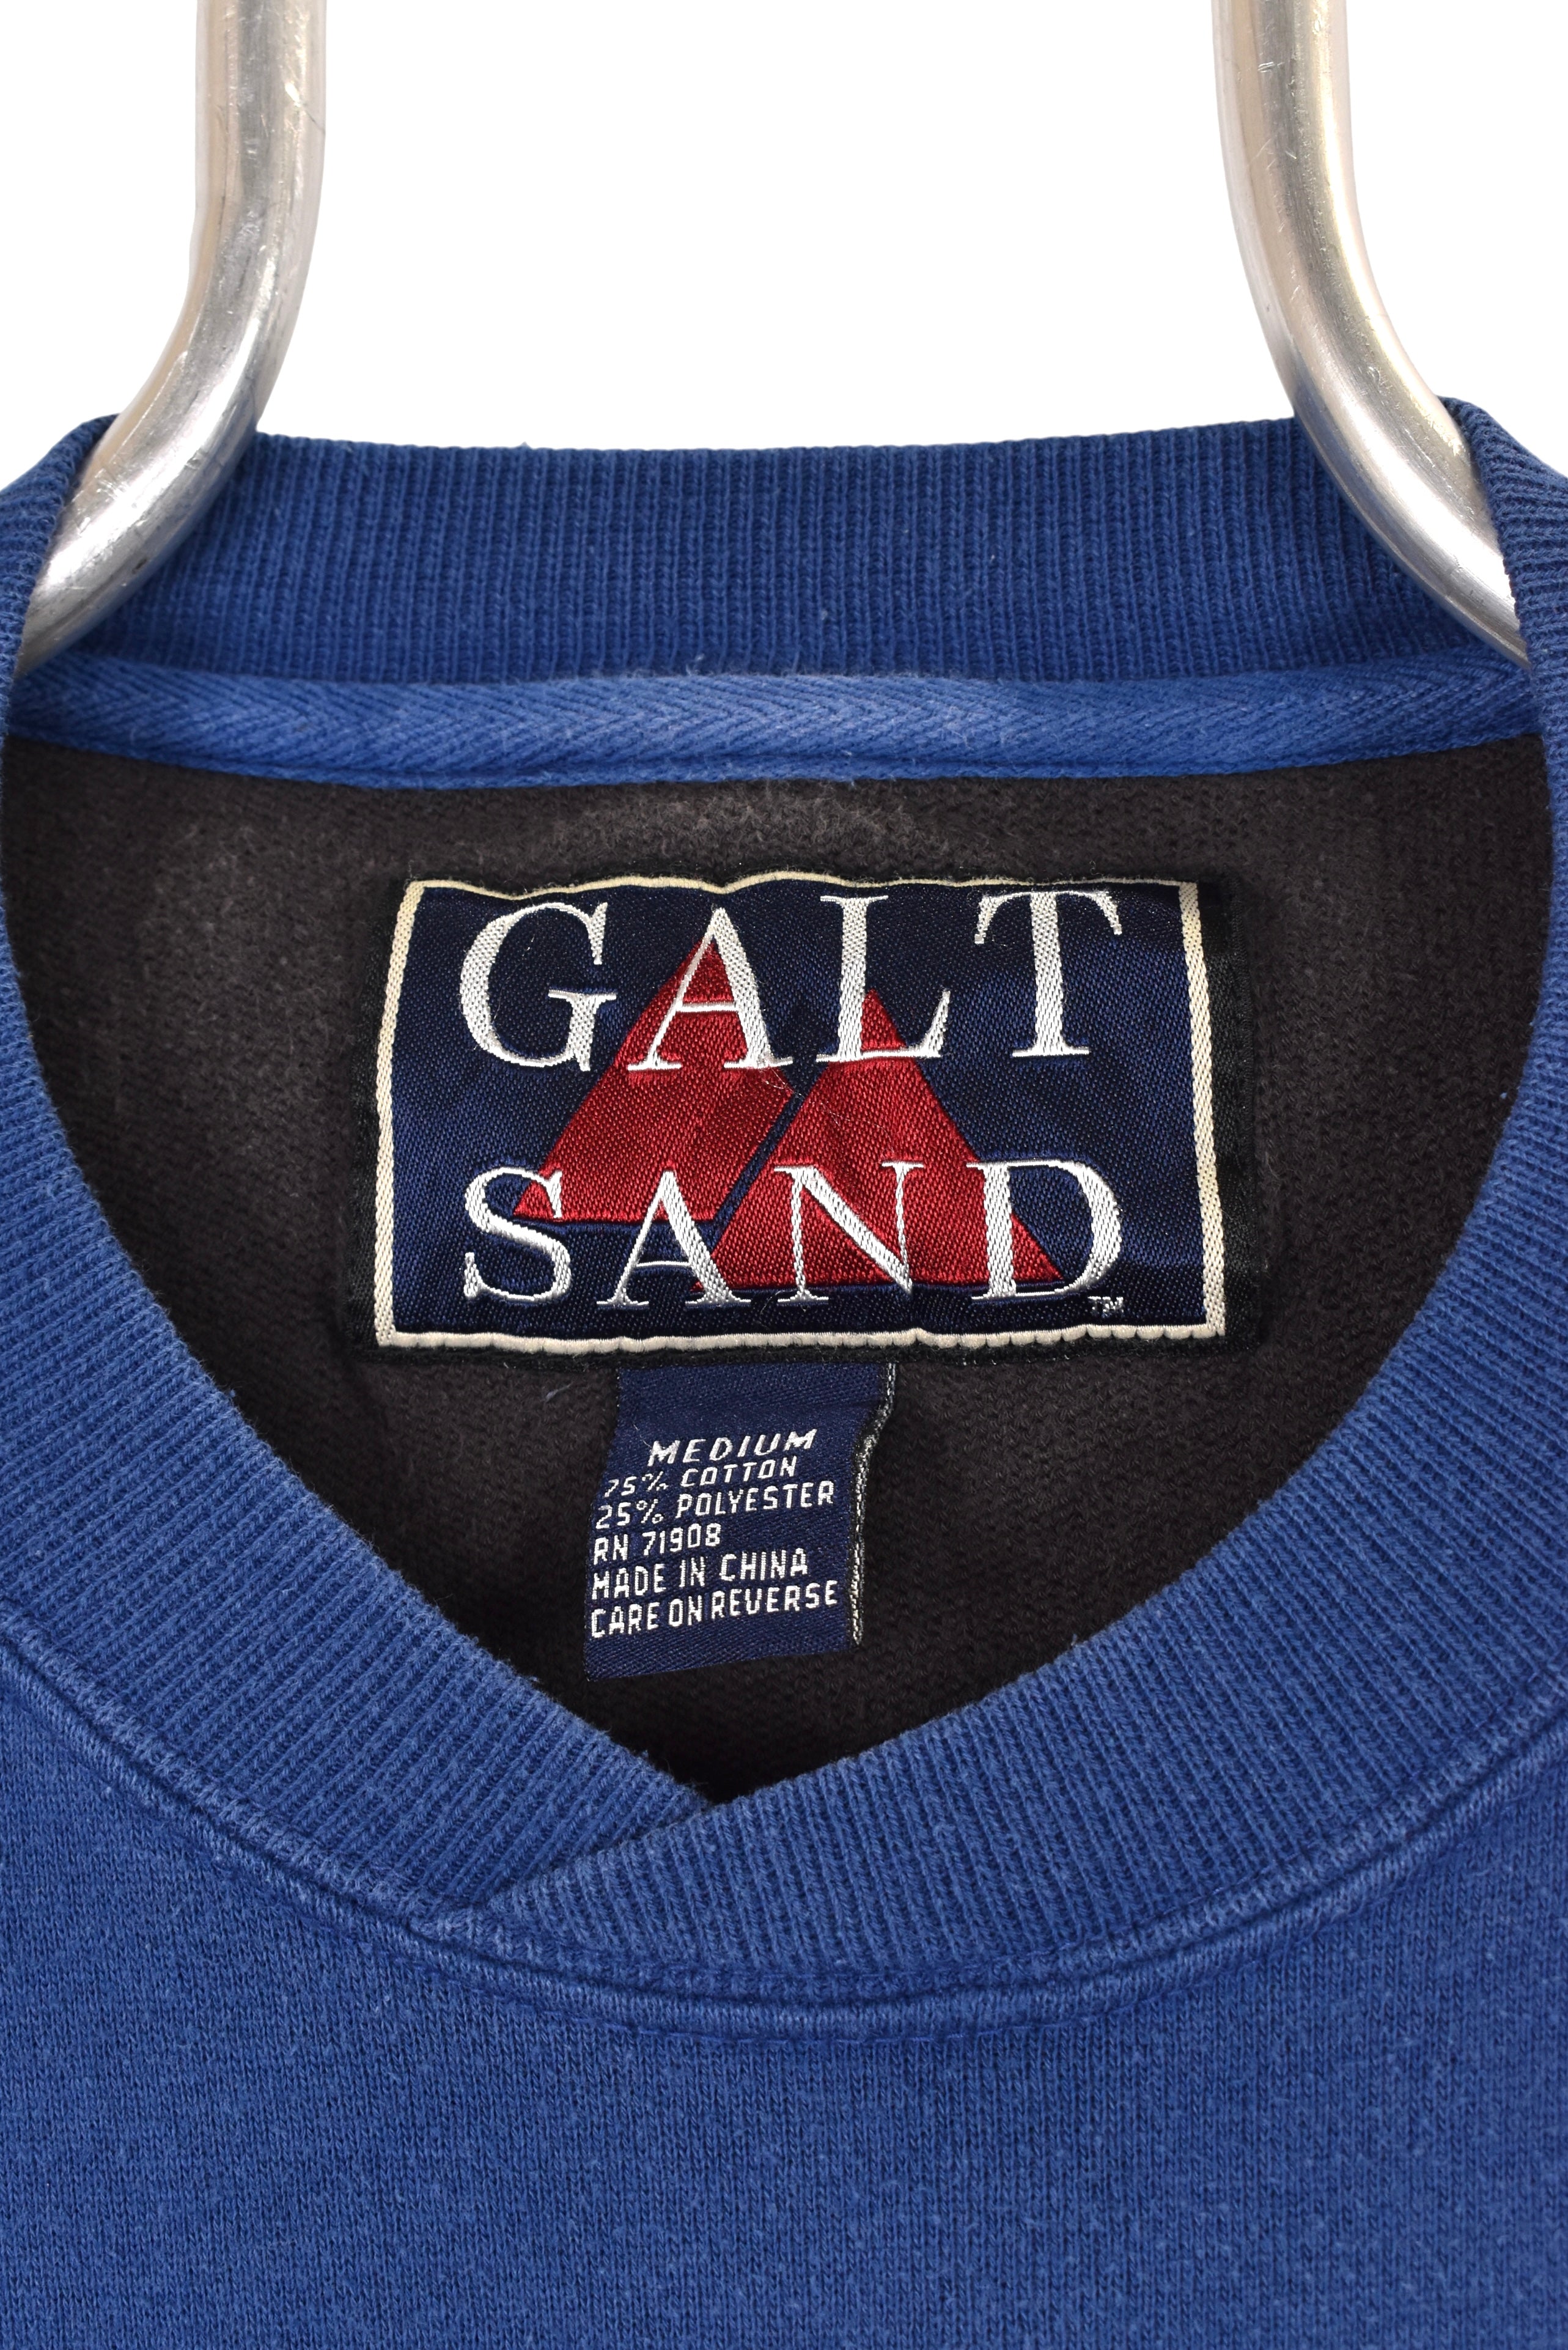 Vintage Seton Hall University sweatshirt, navy blue graphic crewneck - Large